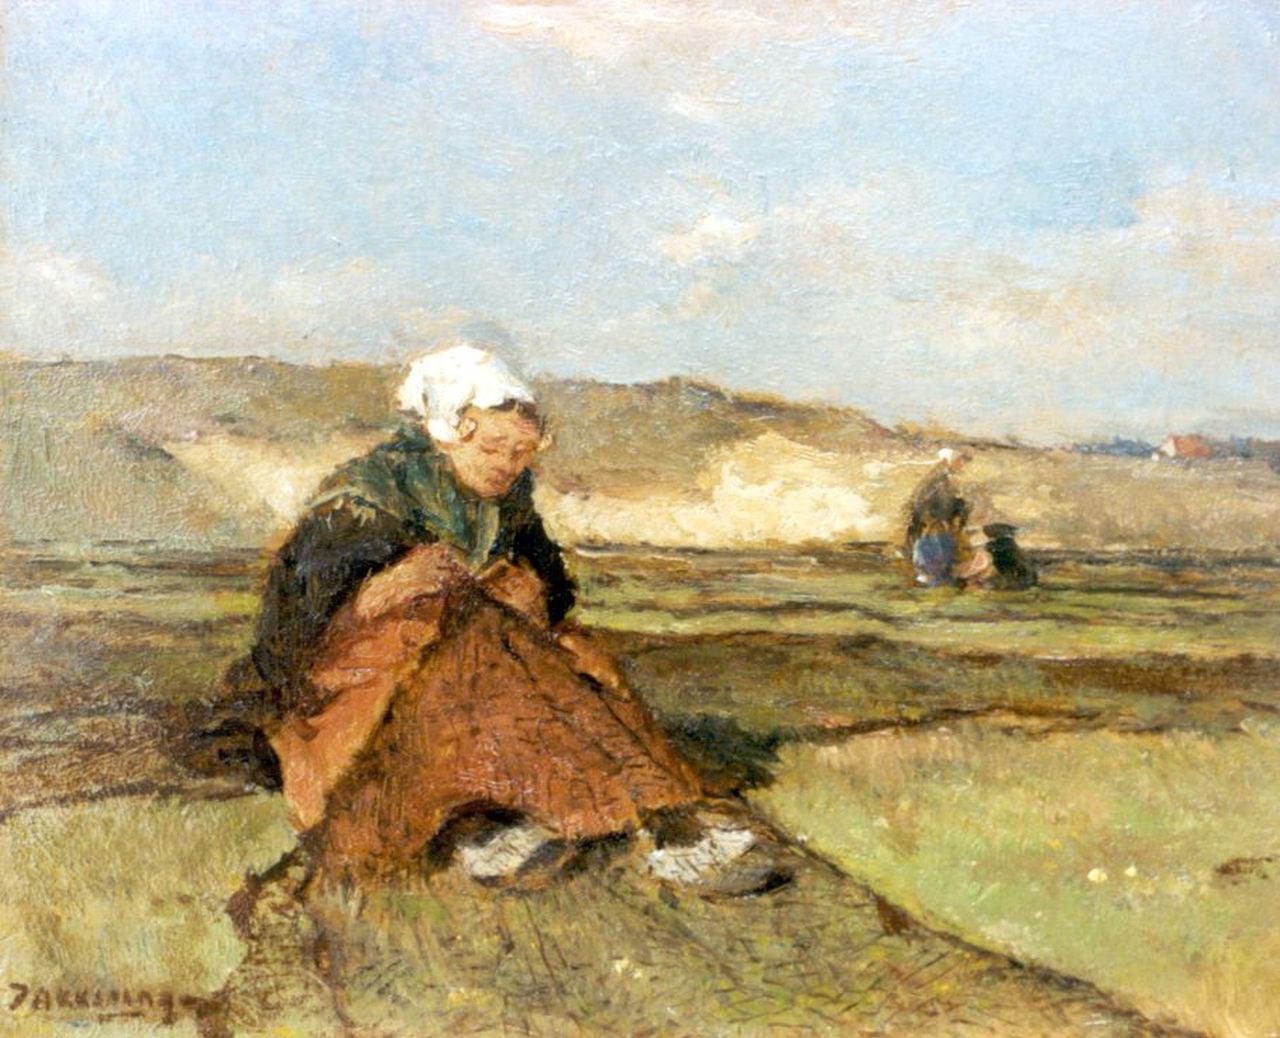 Akkeringa J.E.H.  | 'Johannes Evert' Hendrik Akkeringa, Nettenboetsters in de duinen, olieverf op paneel 14,5 x 17,1 cm, gesigneerd linksonder